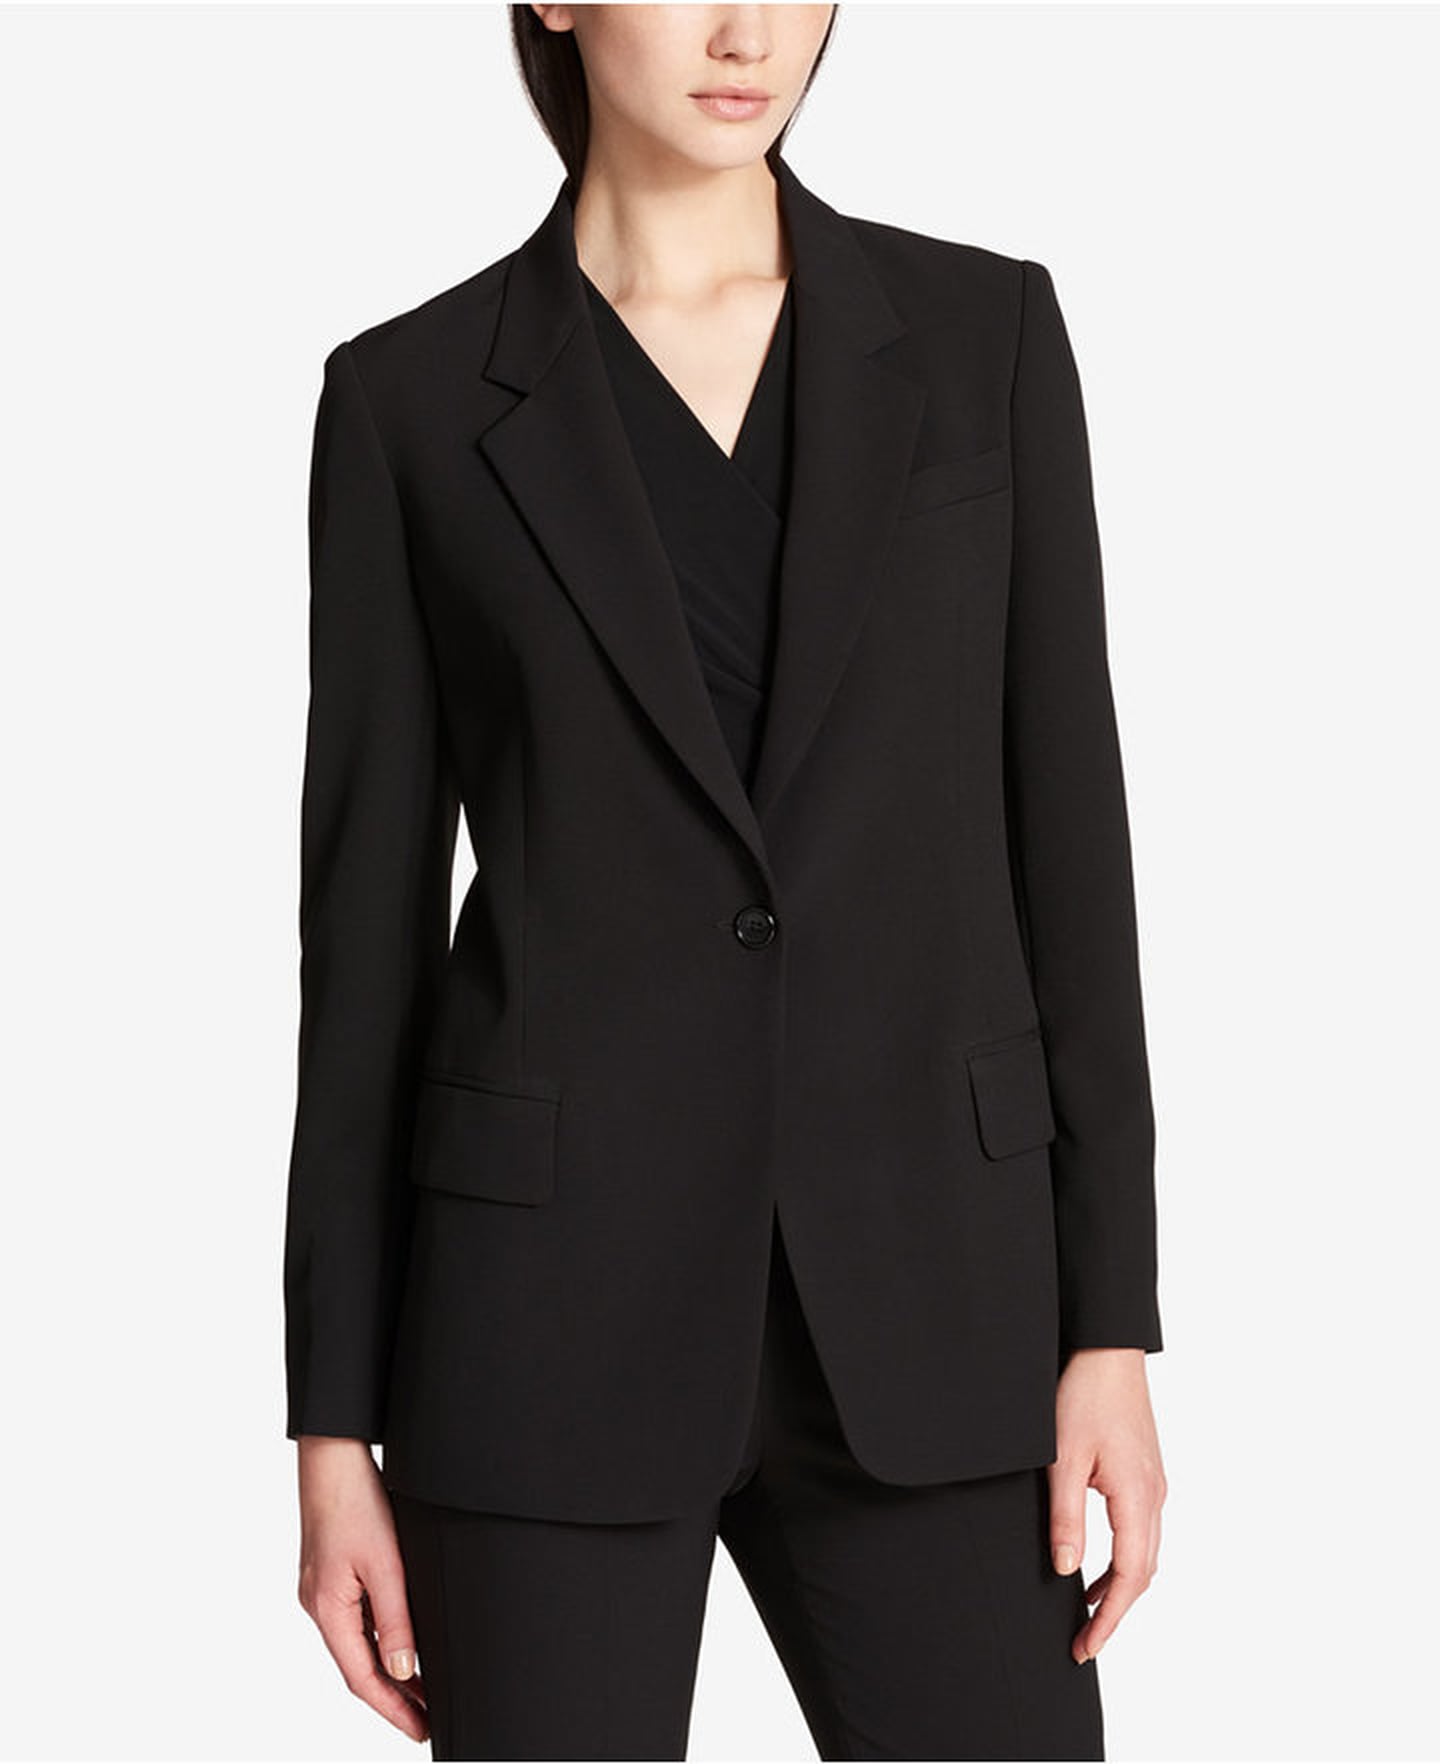 Jennifer Aniston's Black Tuxedo Blazer | POPSUGAR Fashion